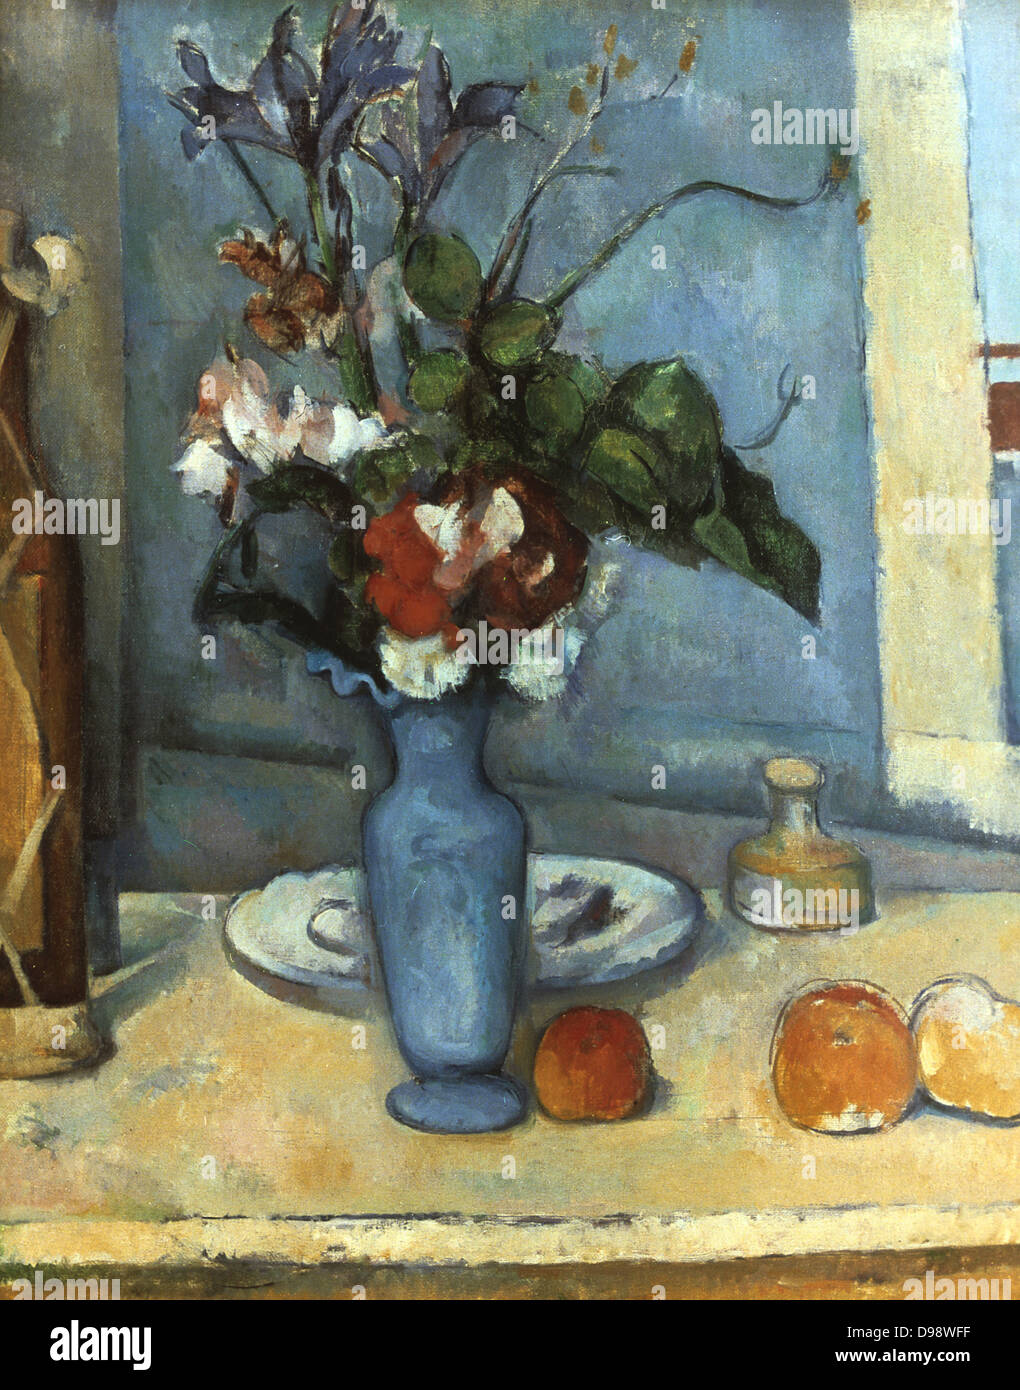 El jarrón azul', 1885-1887. Óleo sobre lienzo. Paul Cezanne (1839-1906), pintor postimpresionista francés. Still Life Flores frutas de mesa. Foto de stock